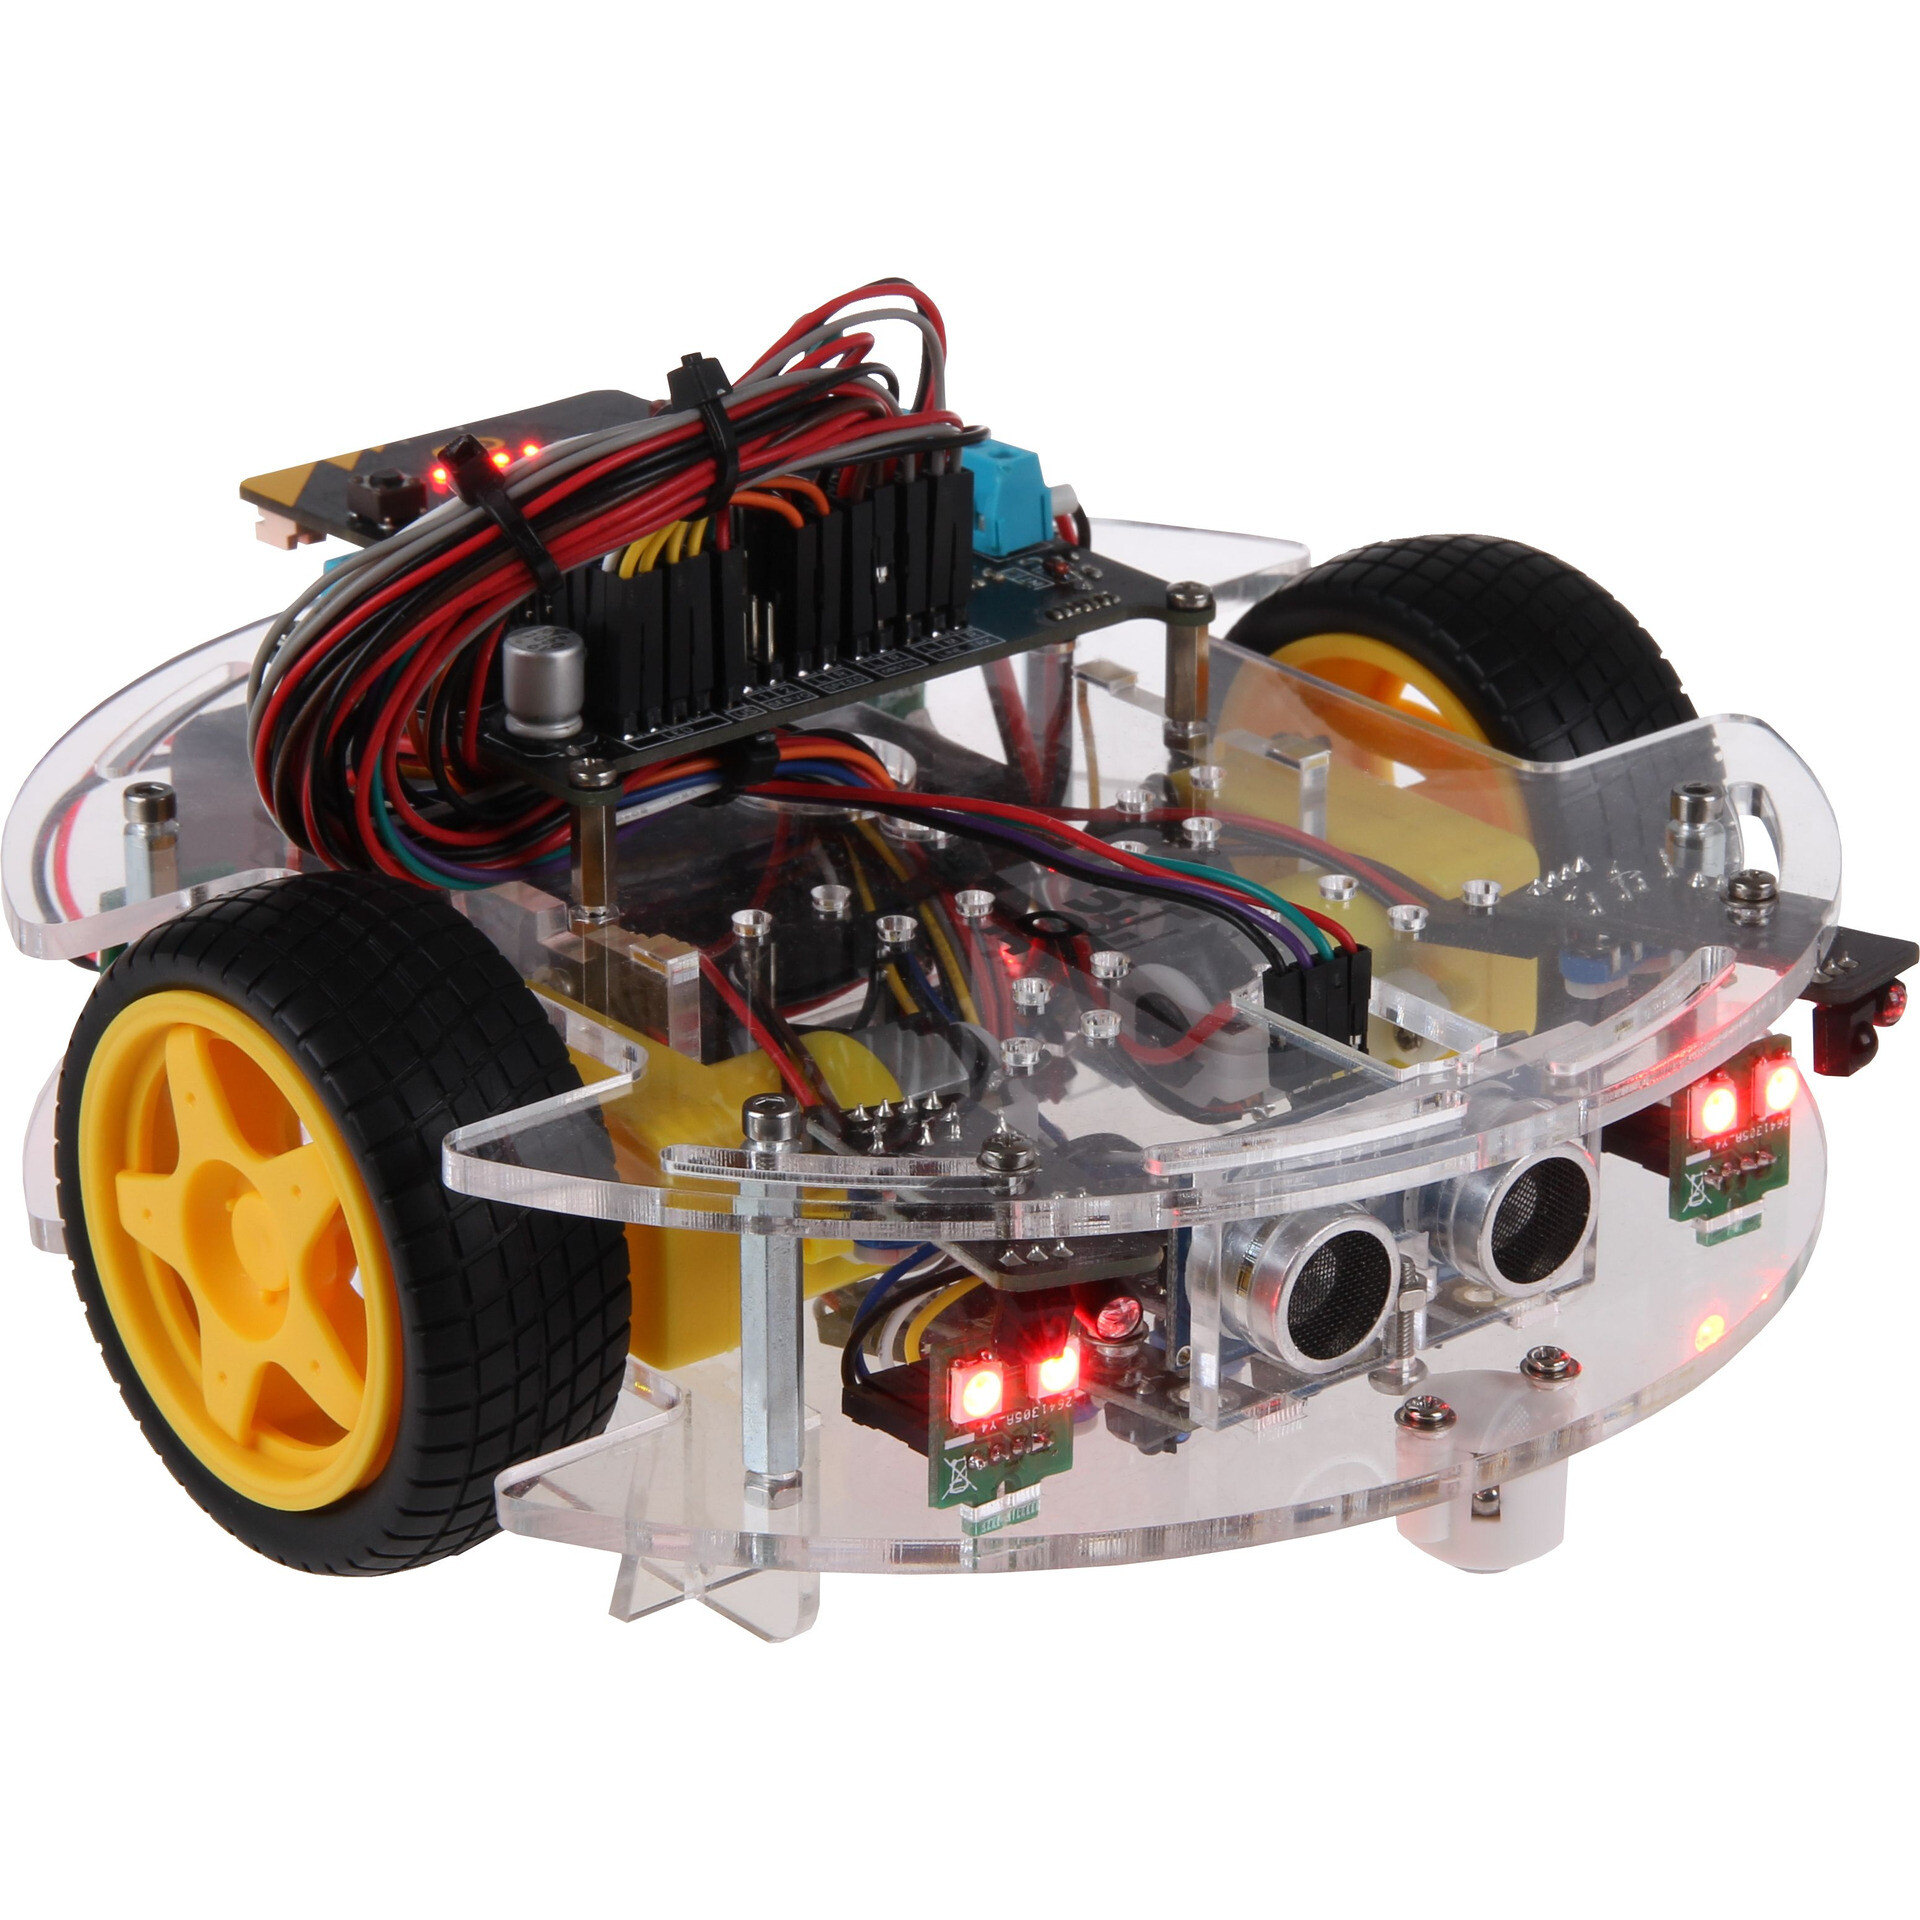 Joy-IT Bausatz programmierbares Roboterauto Joy-Car inkl. Einplatinencomputer micro:bit v2